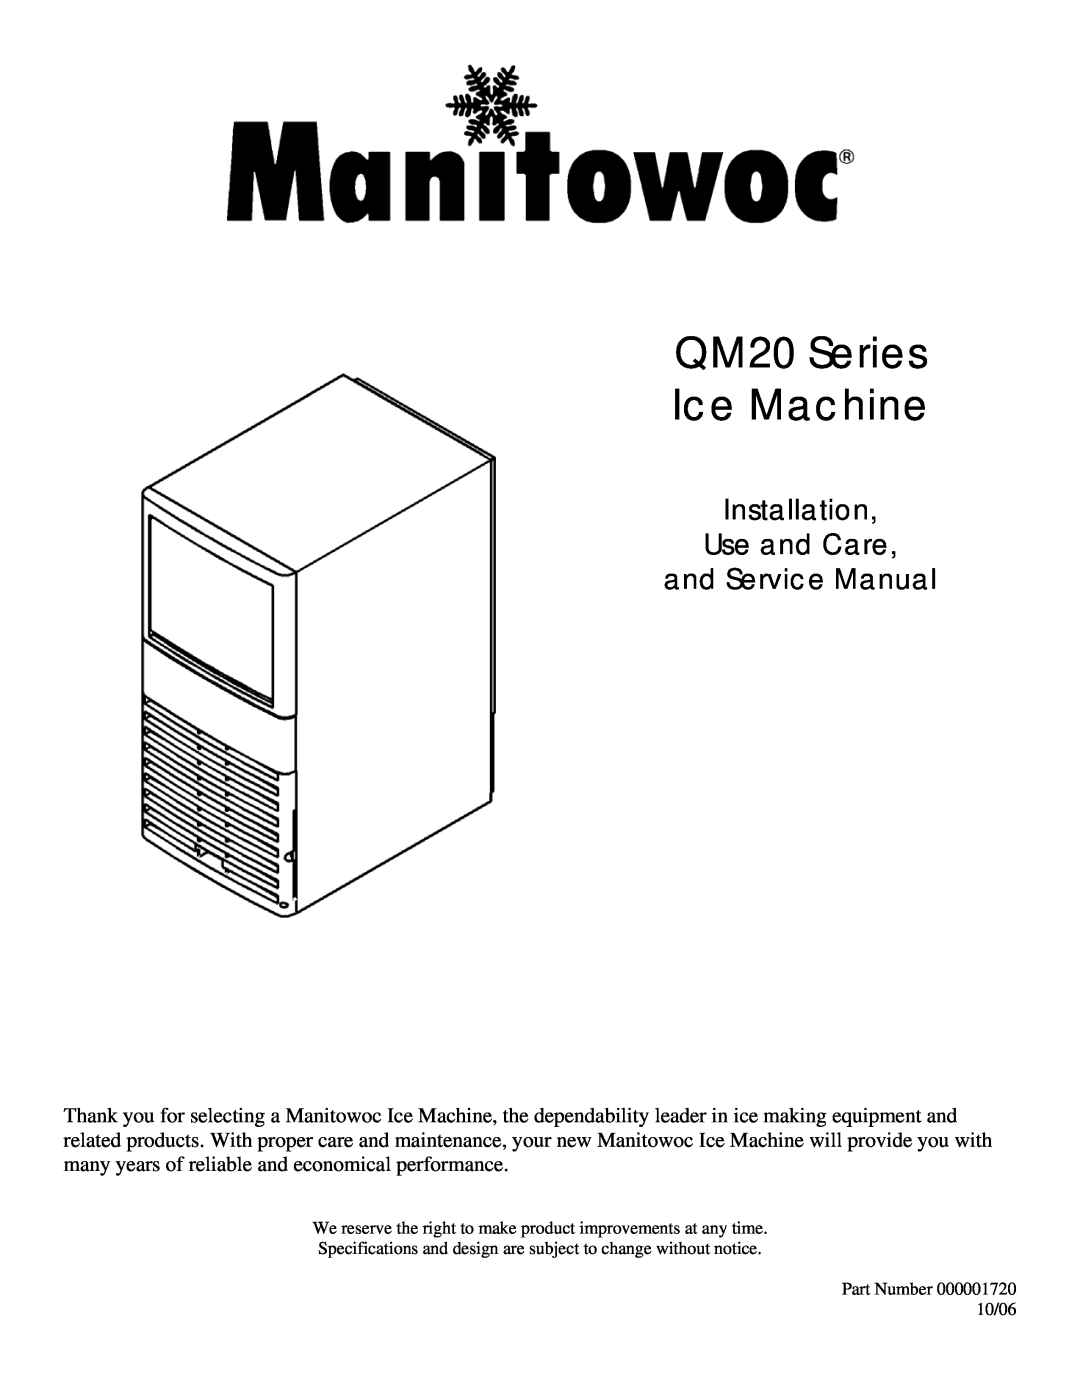 Manitowoc Ice service manual QM20 Series Ice Machine 